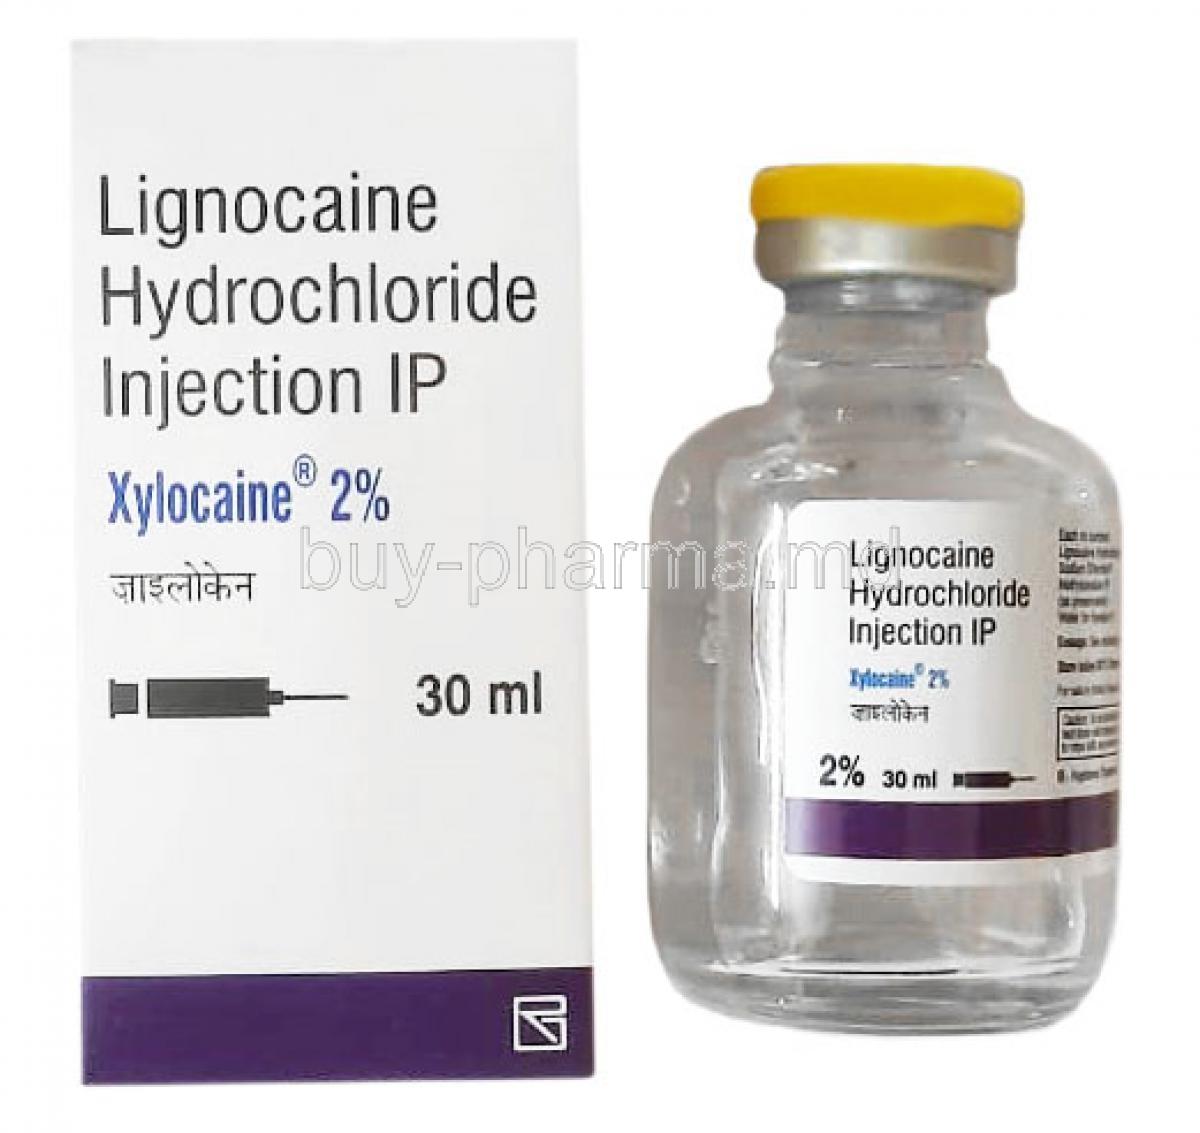 Xylocaine Injection,Lignocaine 2%, 30ml, Zydus Cadila, Box, bottle front view